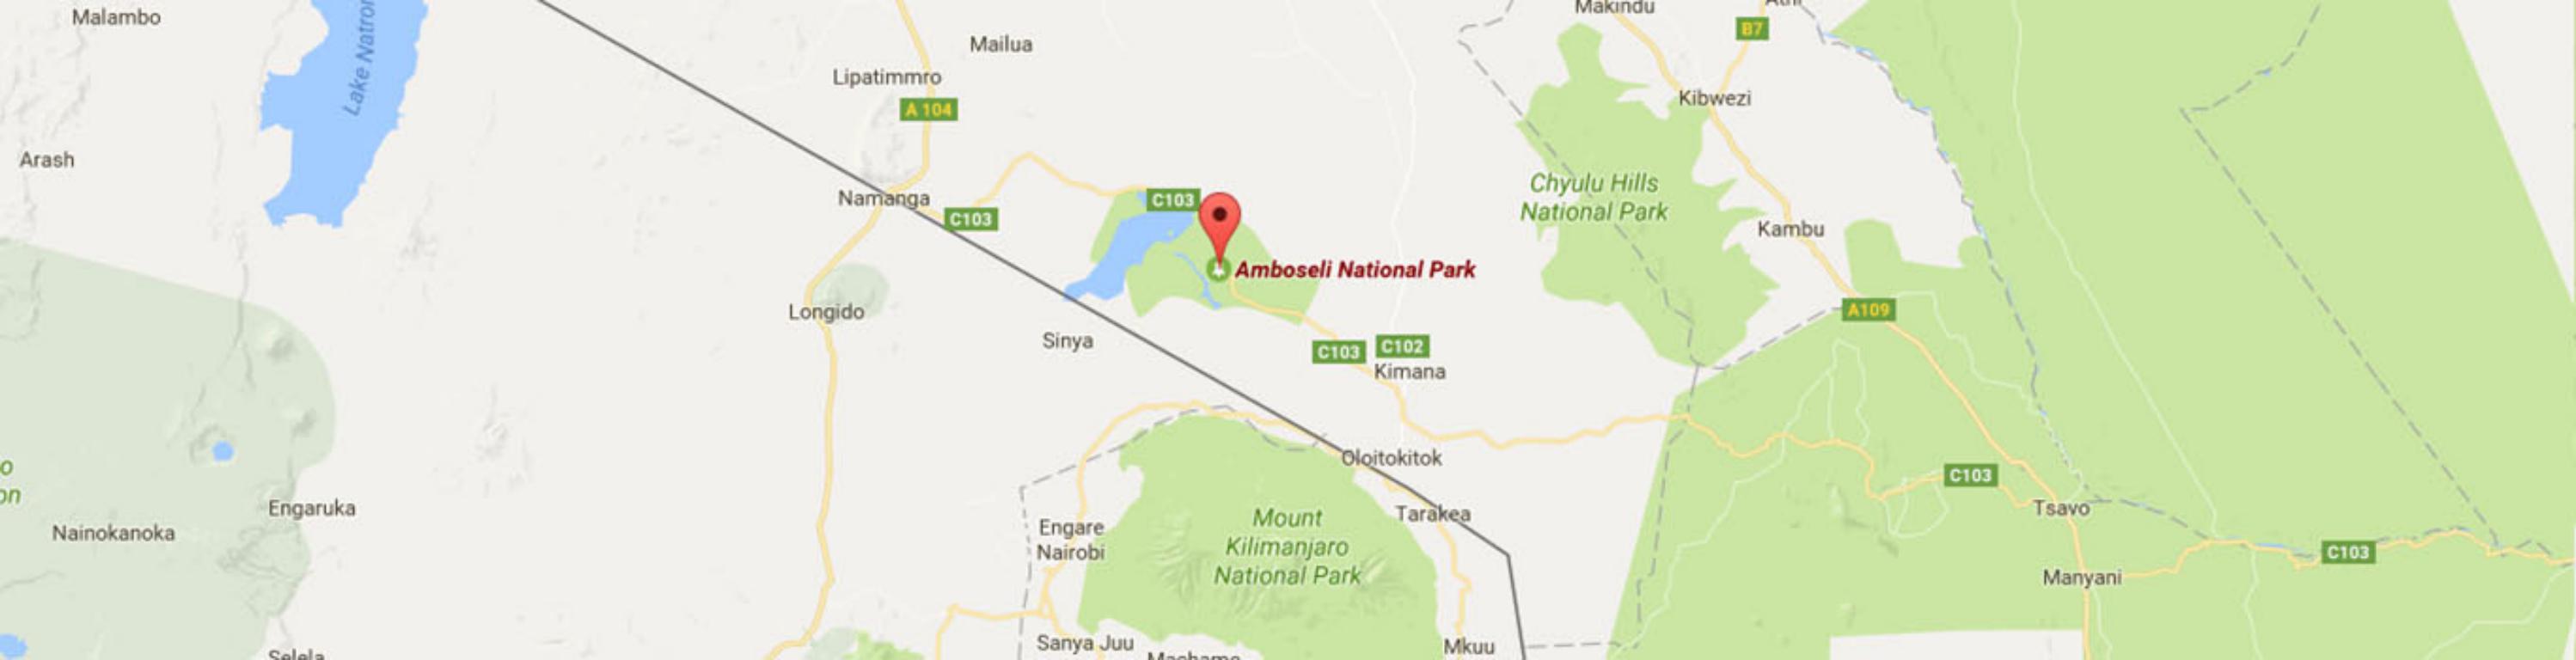 Parque nacional de Amboseli